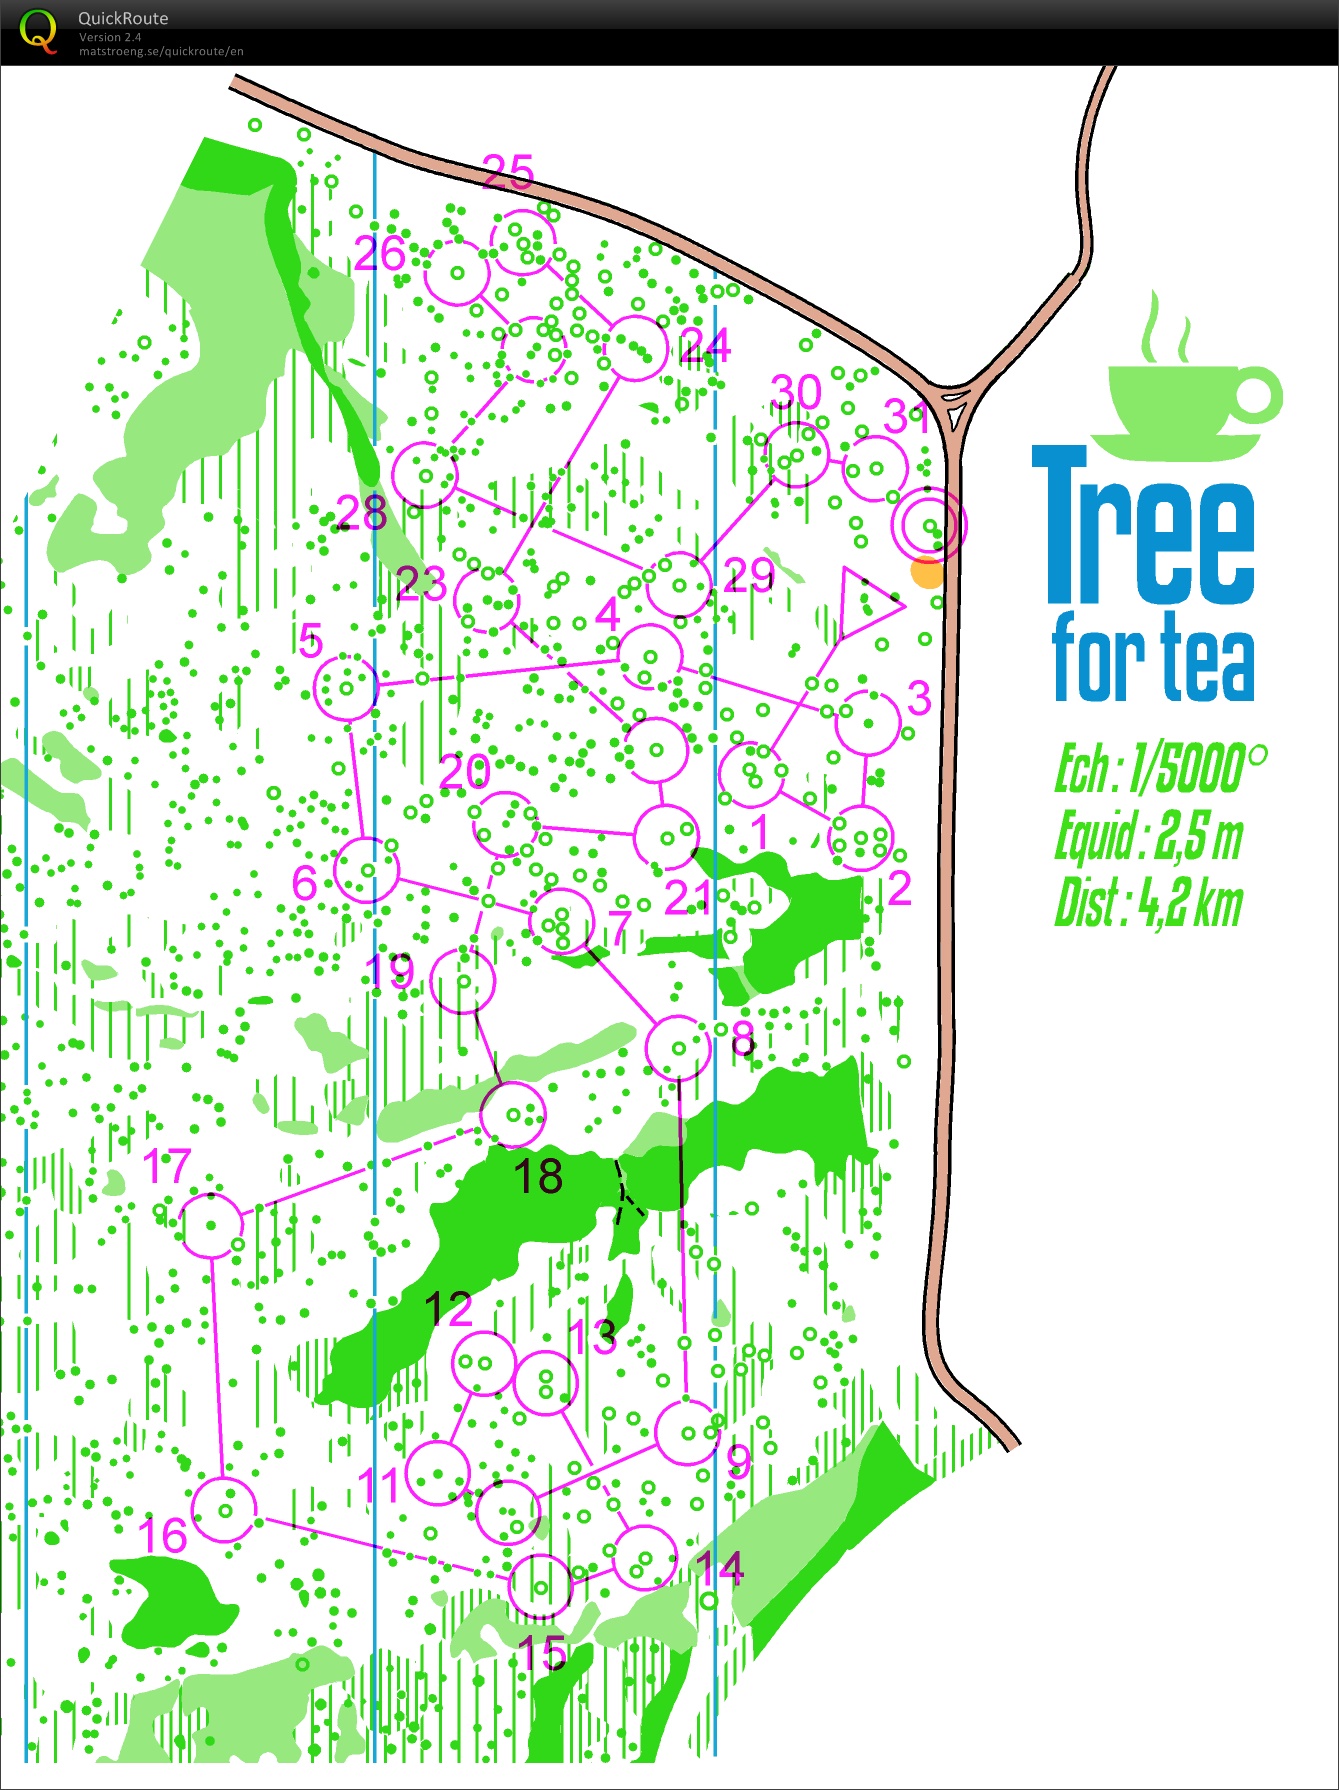 Tree for tea (16-01-2016)